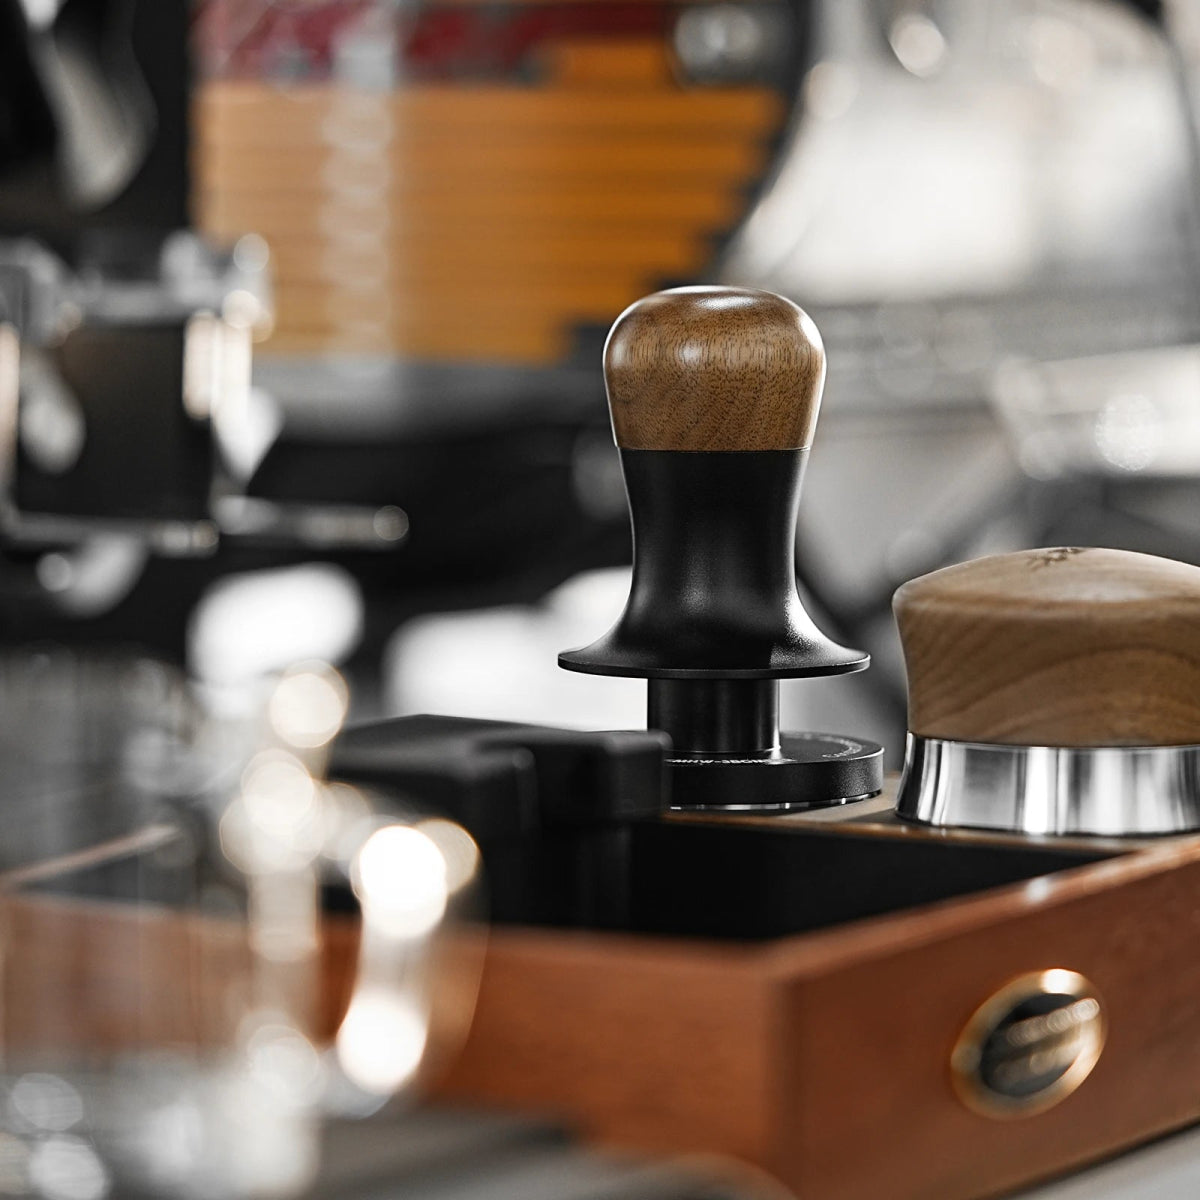 Flash Constant Pressure Espresso Tamper - Coffee Makers & Equipment - Scribble Snacks